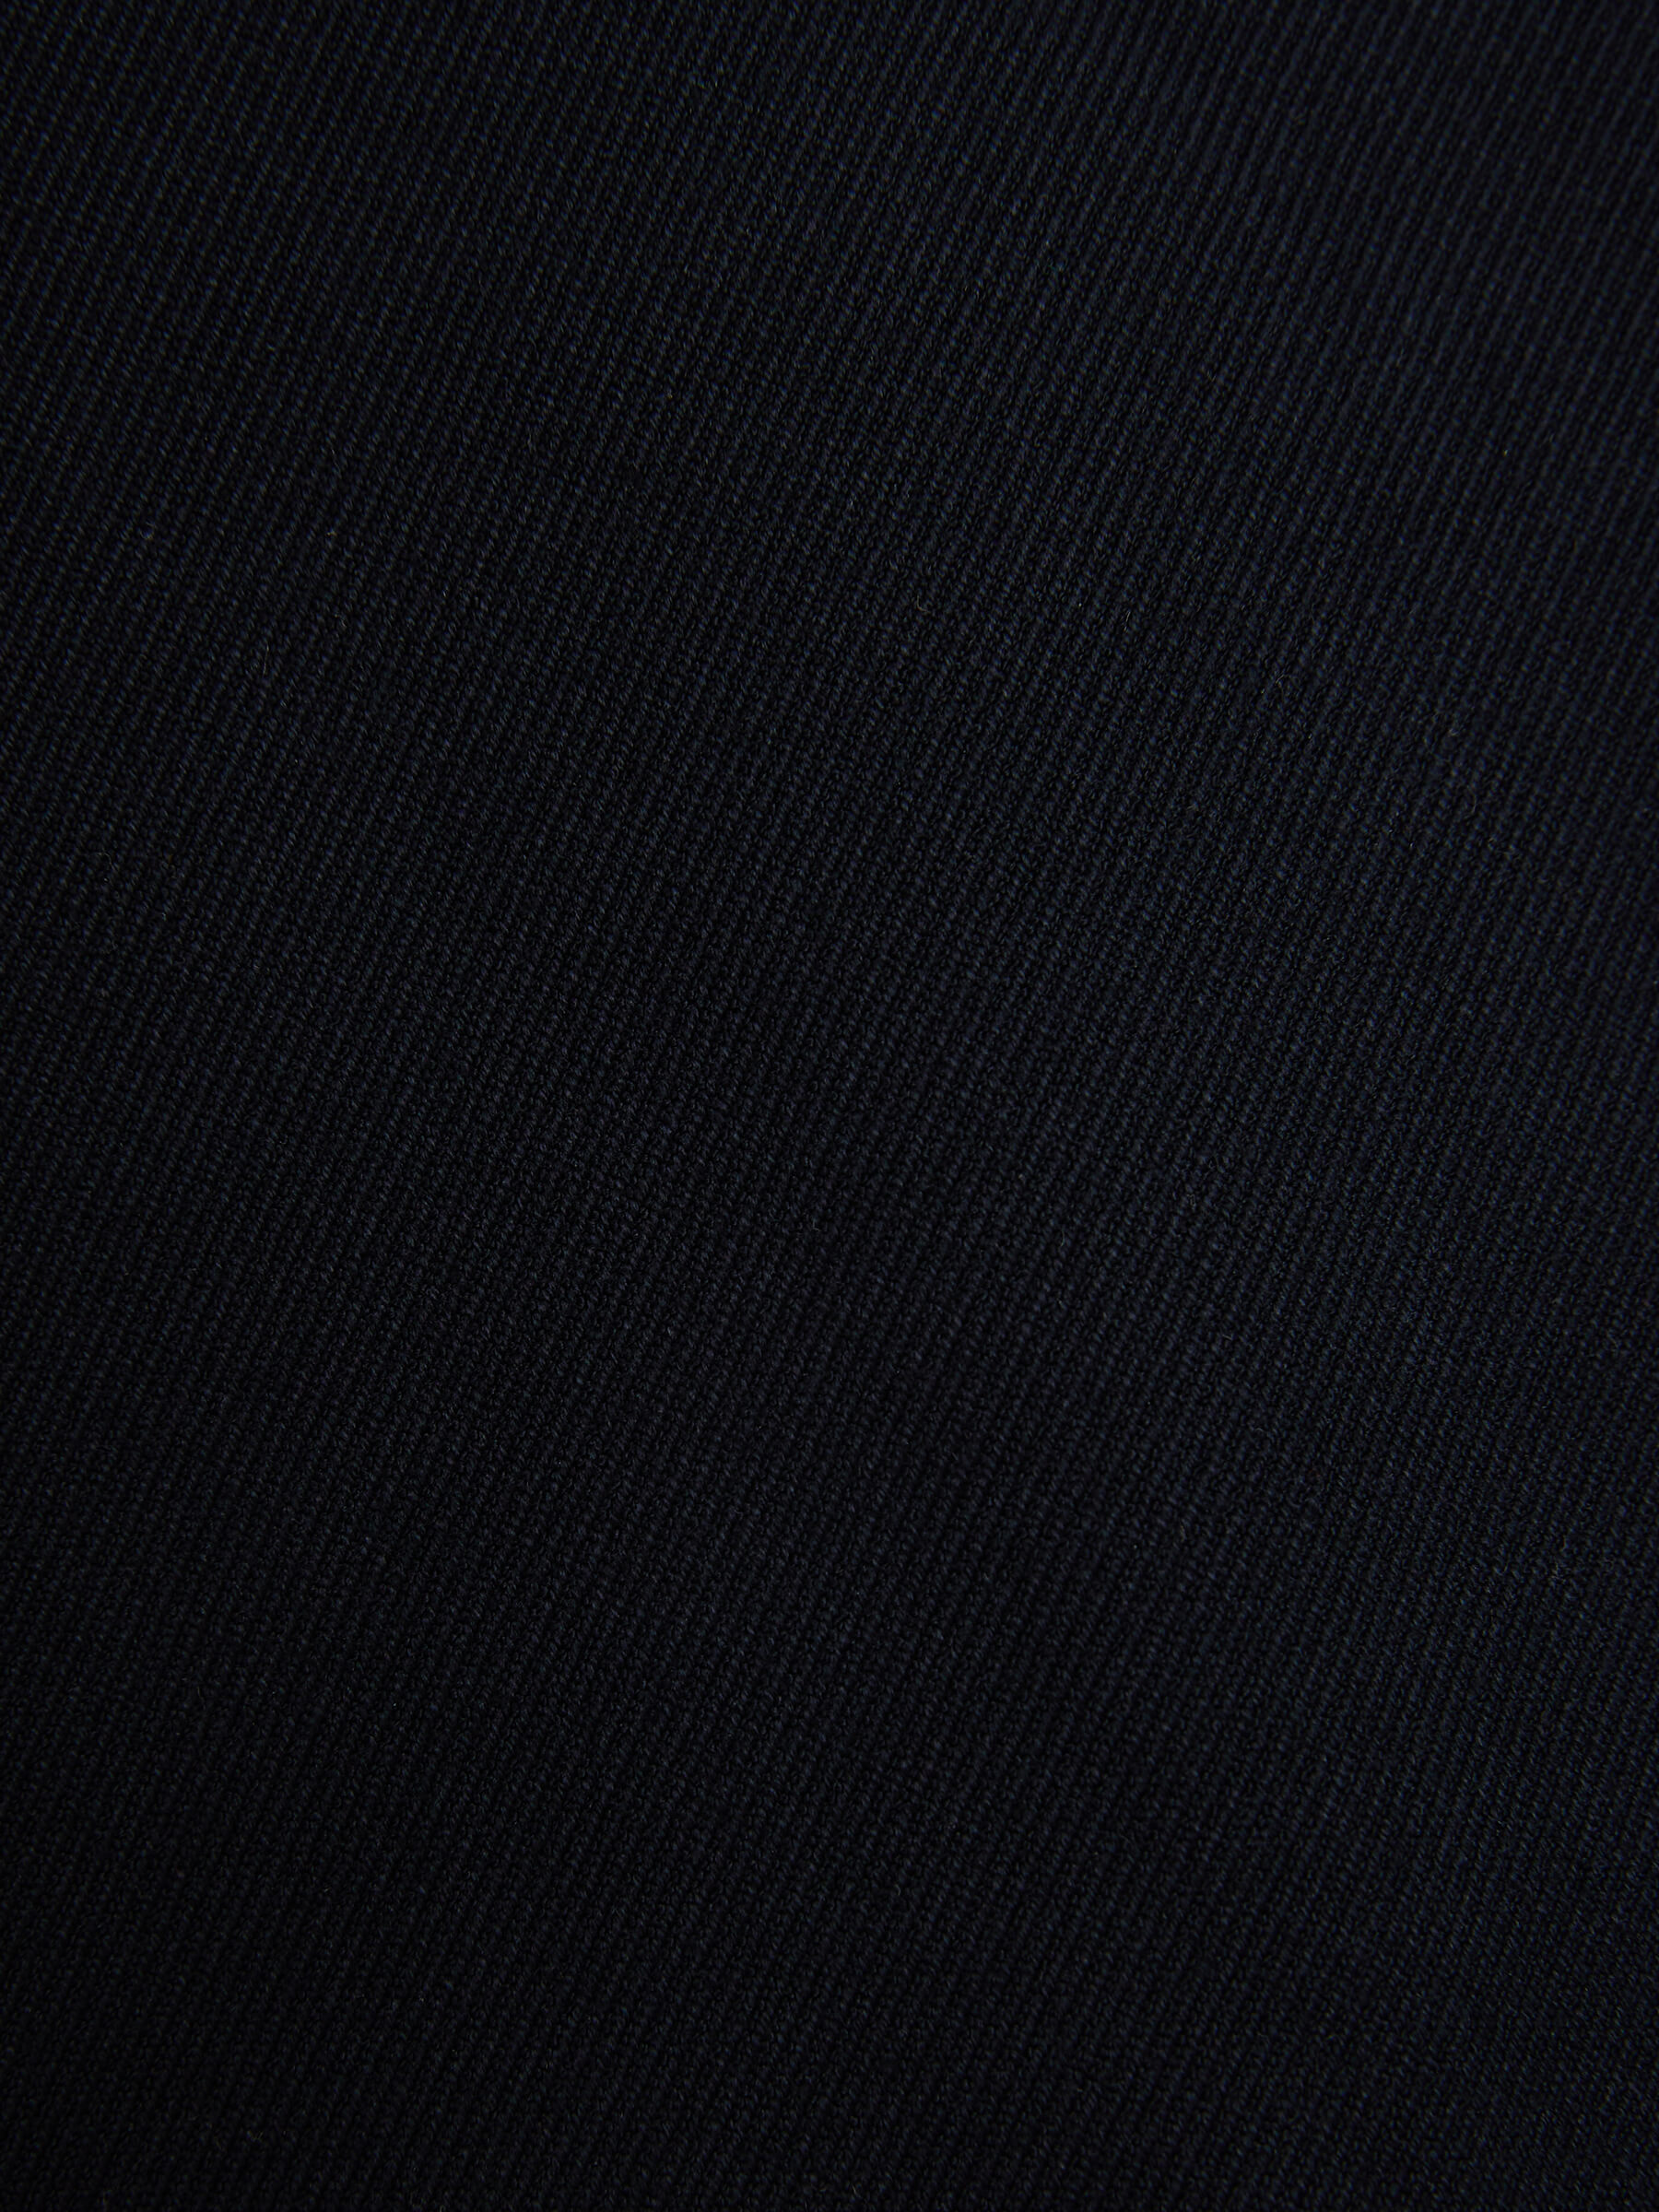 Юбка-мини на пуговицах 0126 S, темно-синий - фото 5